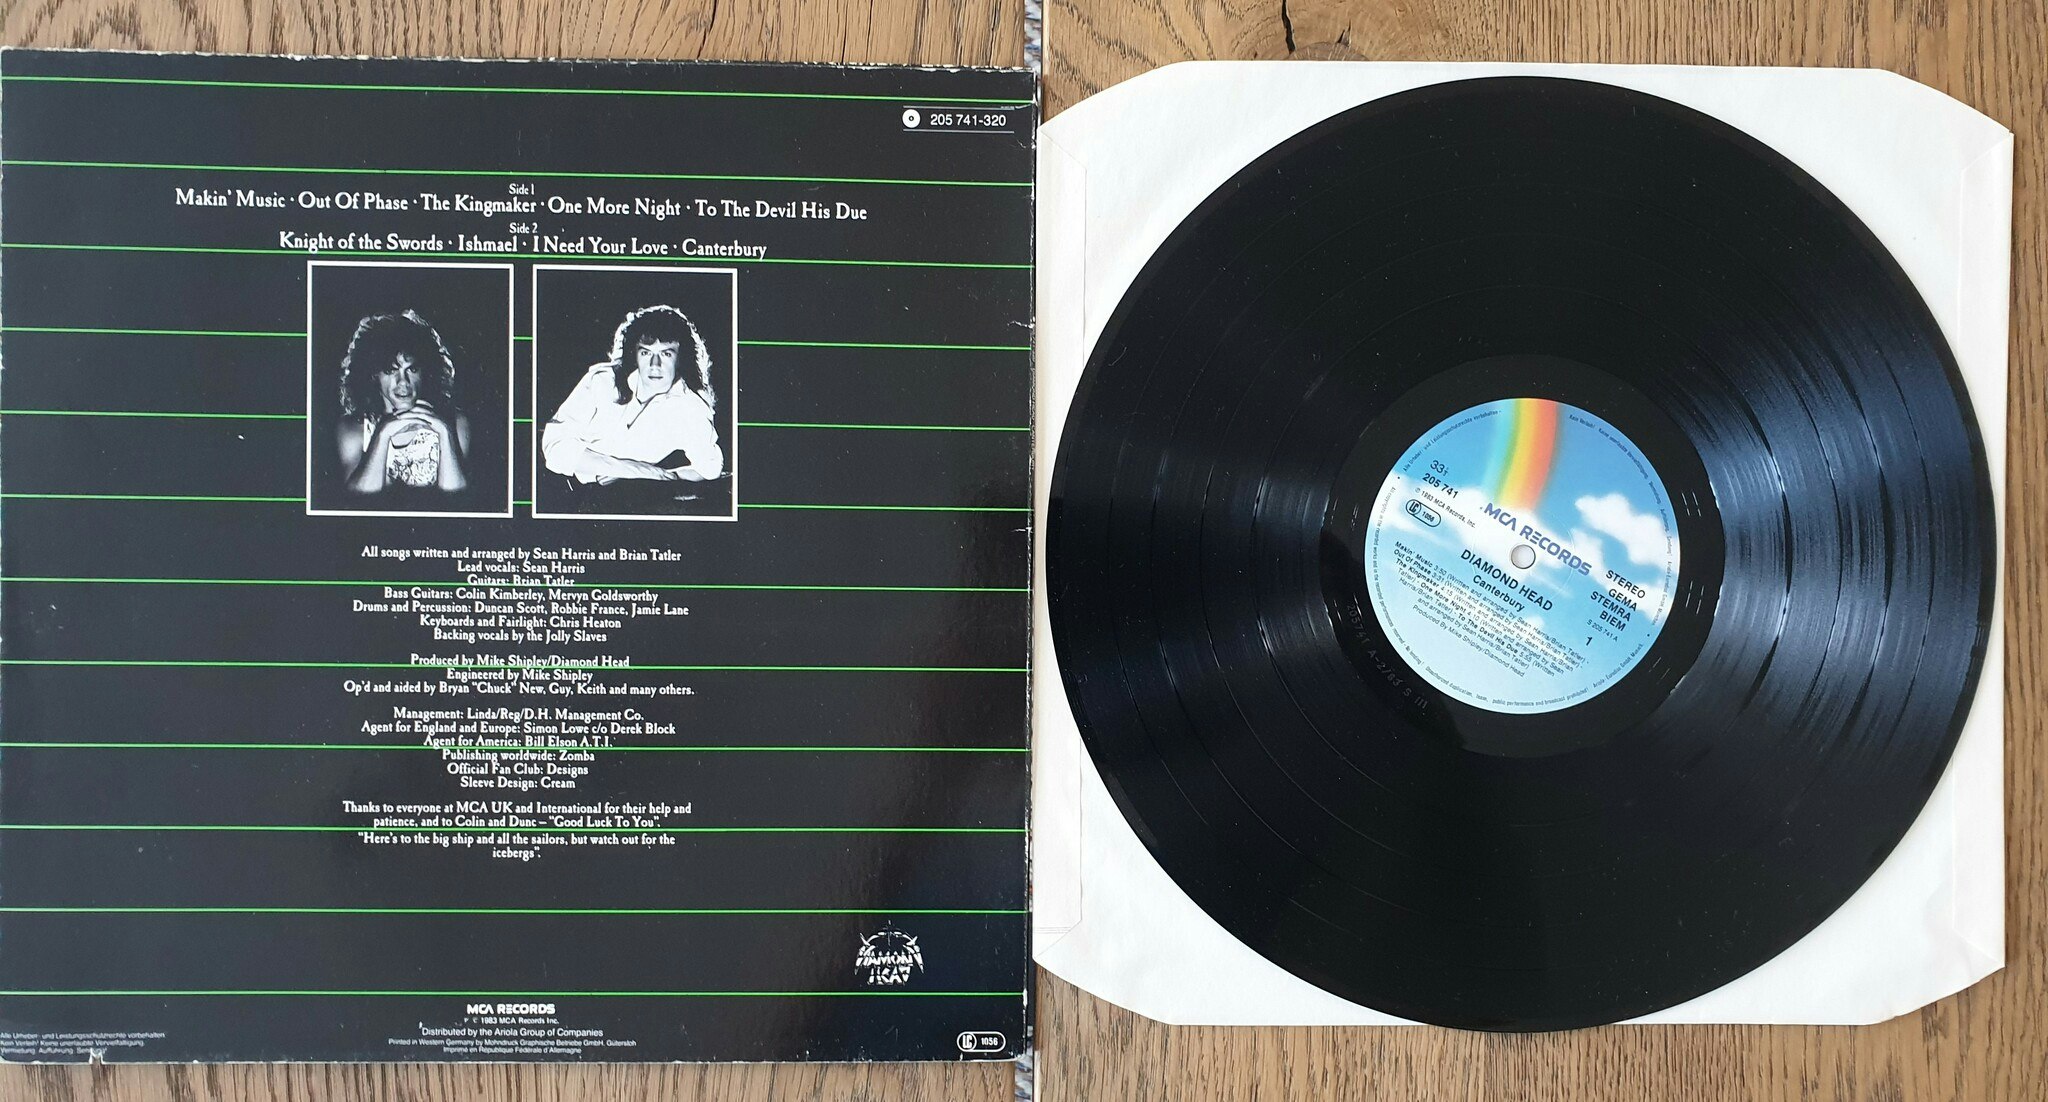 Diamond Head, Canterbury. Vinyl LP